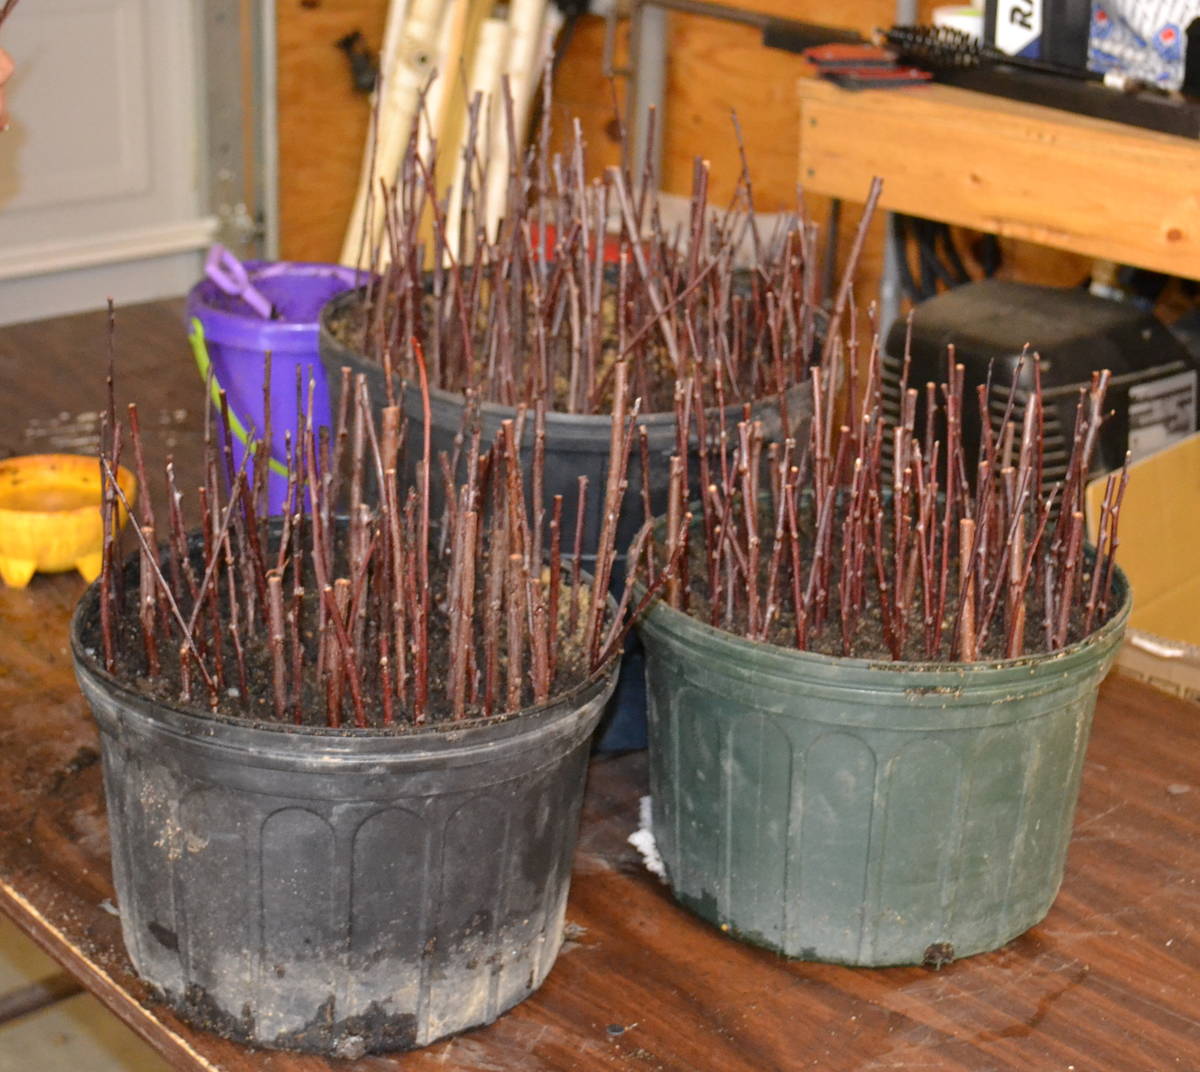 Buckets of hardwood cuttings of Purple Sandcherry.